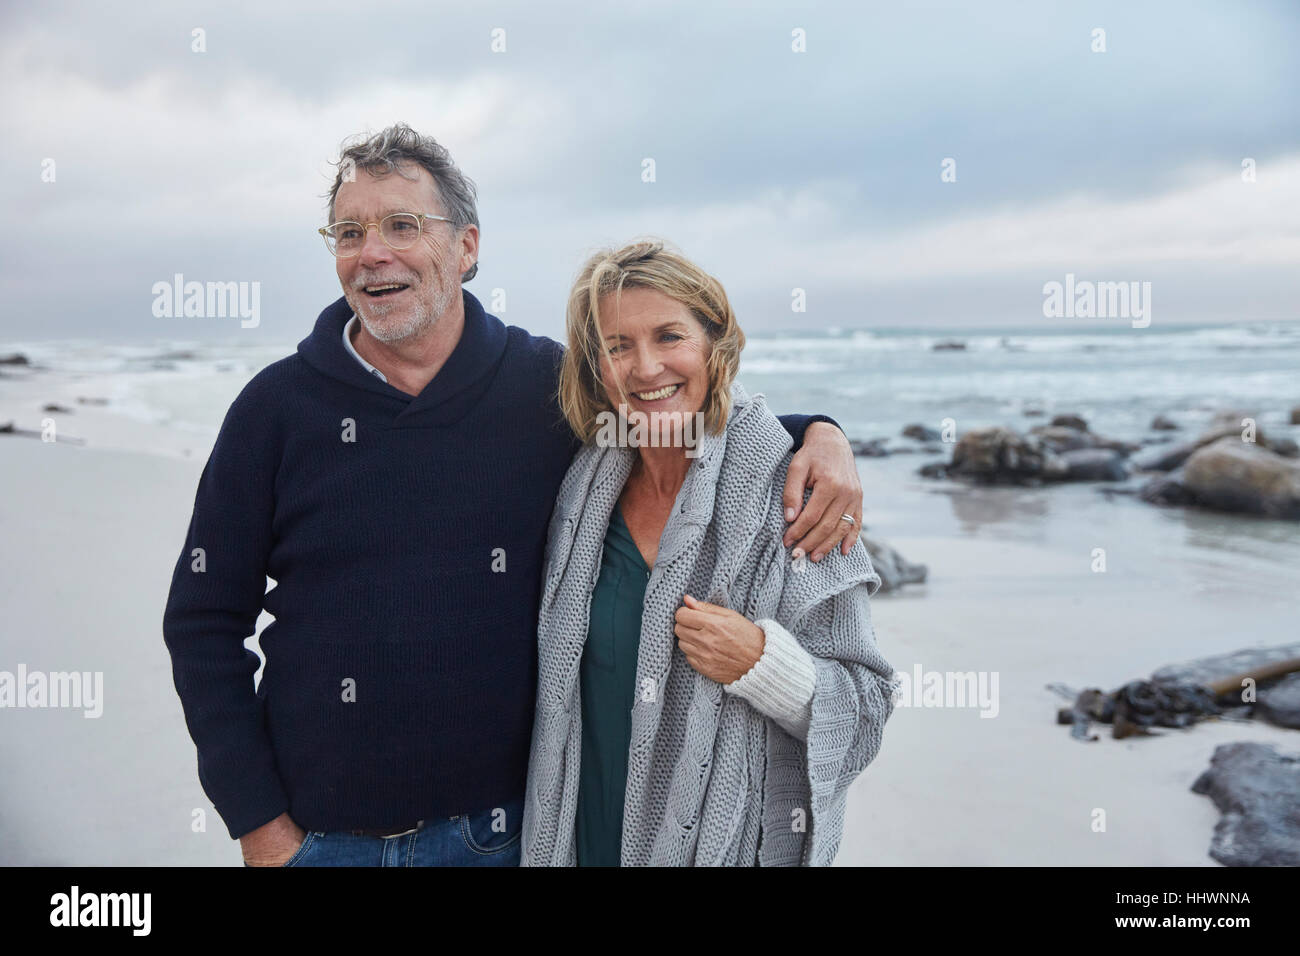 Portrait of smiling senior couple hugging on beach orageux Banque D'Images